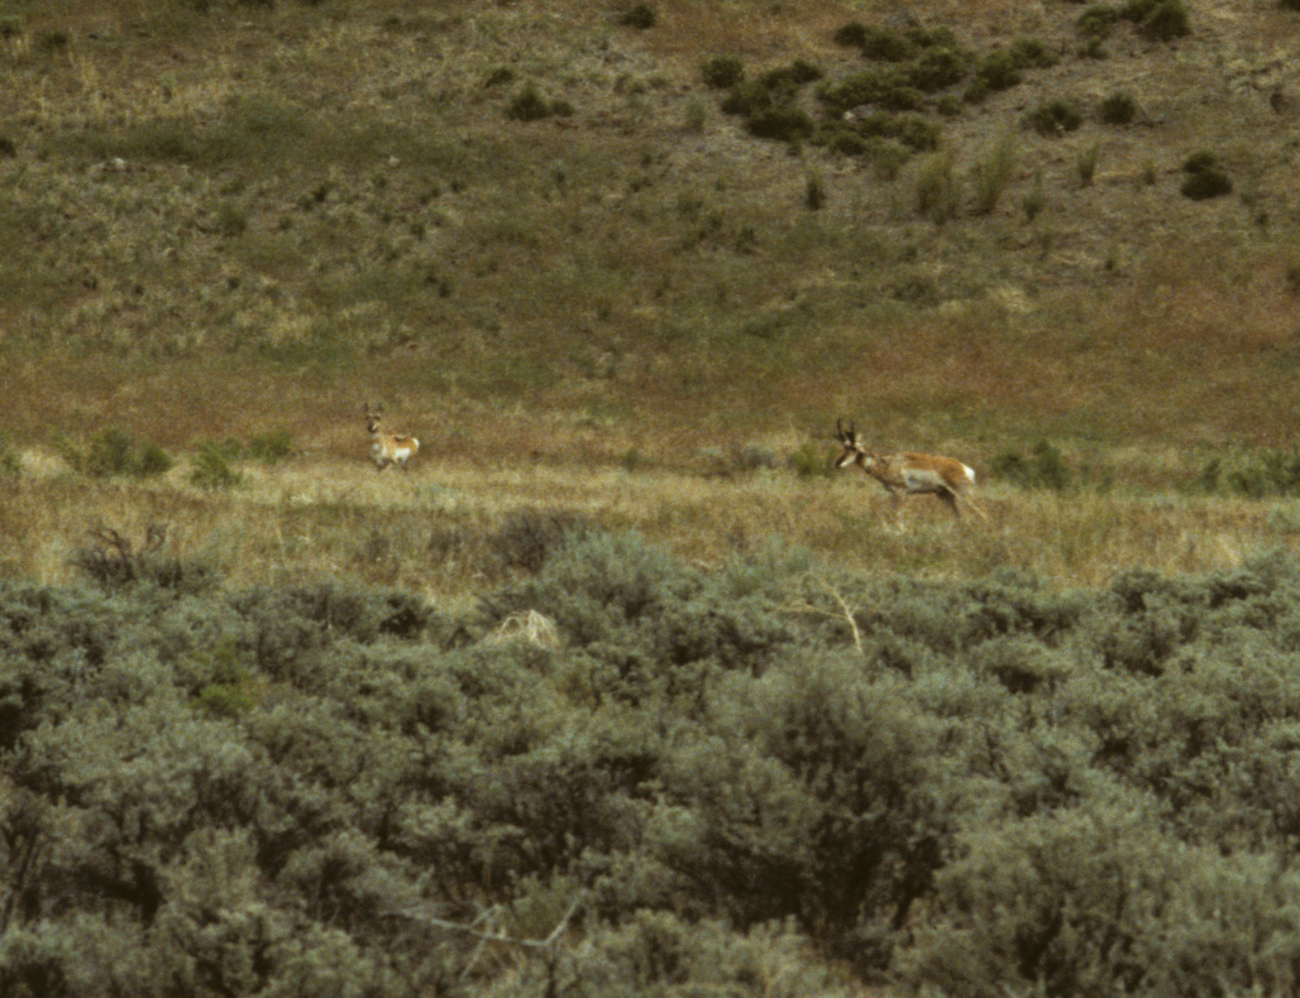 Antelope in eastern Oregon